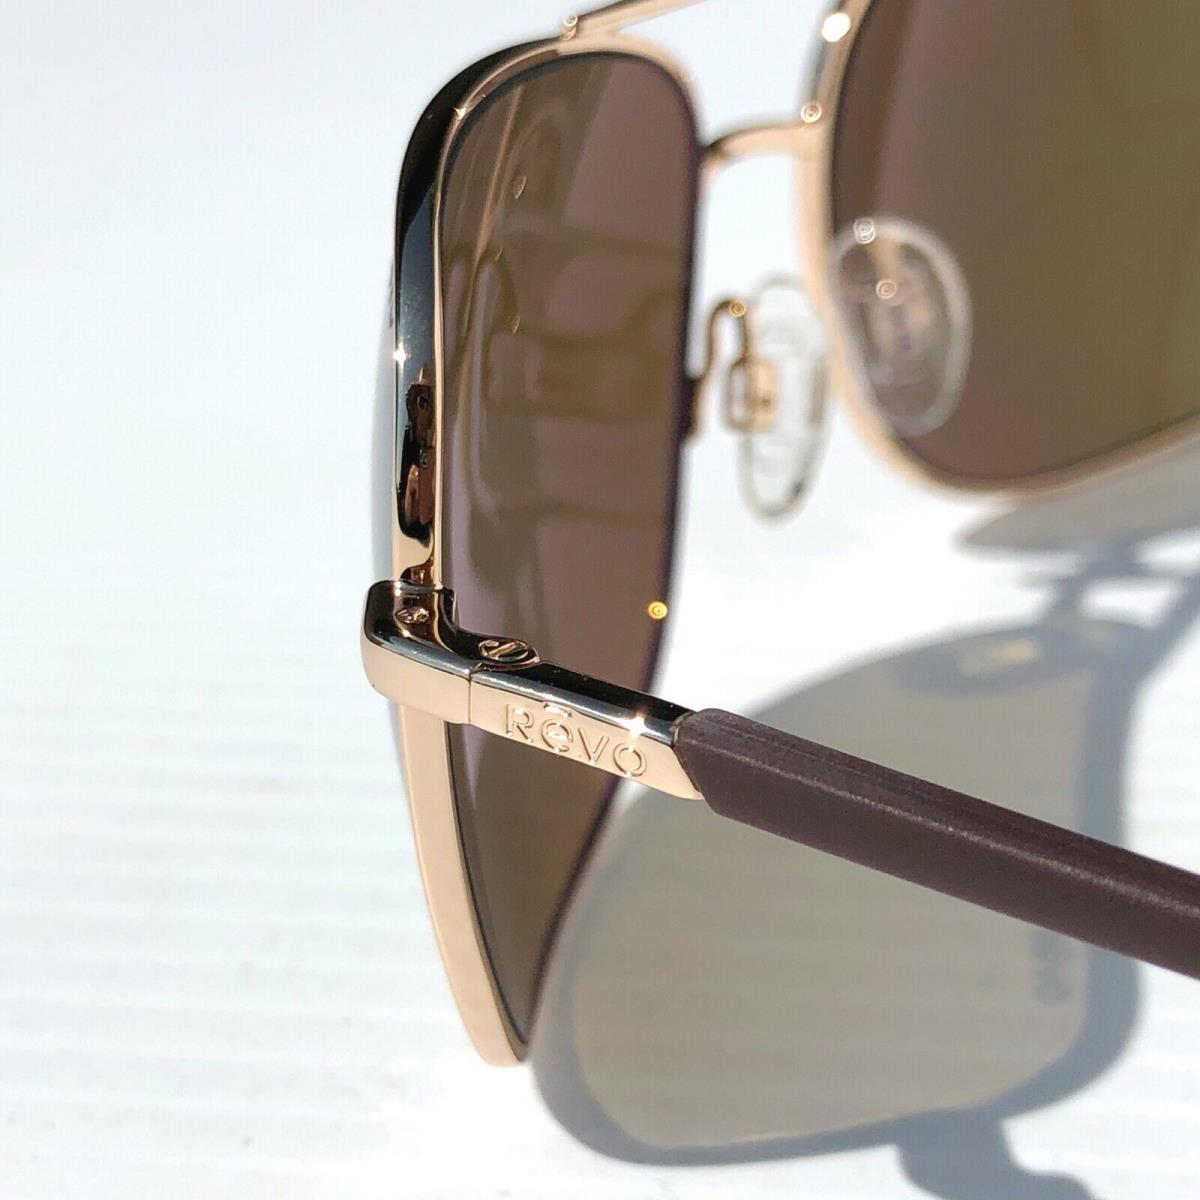 Revo sunglasses Summit - Gold Frame, Brown Lens